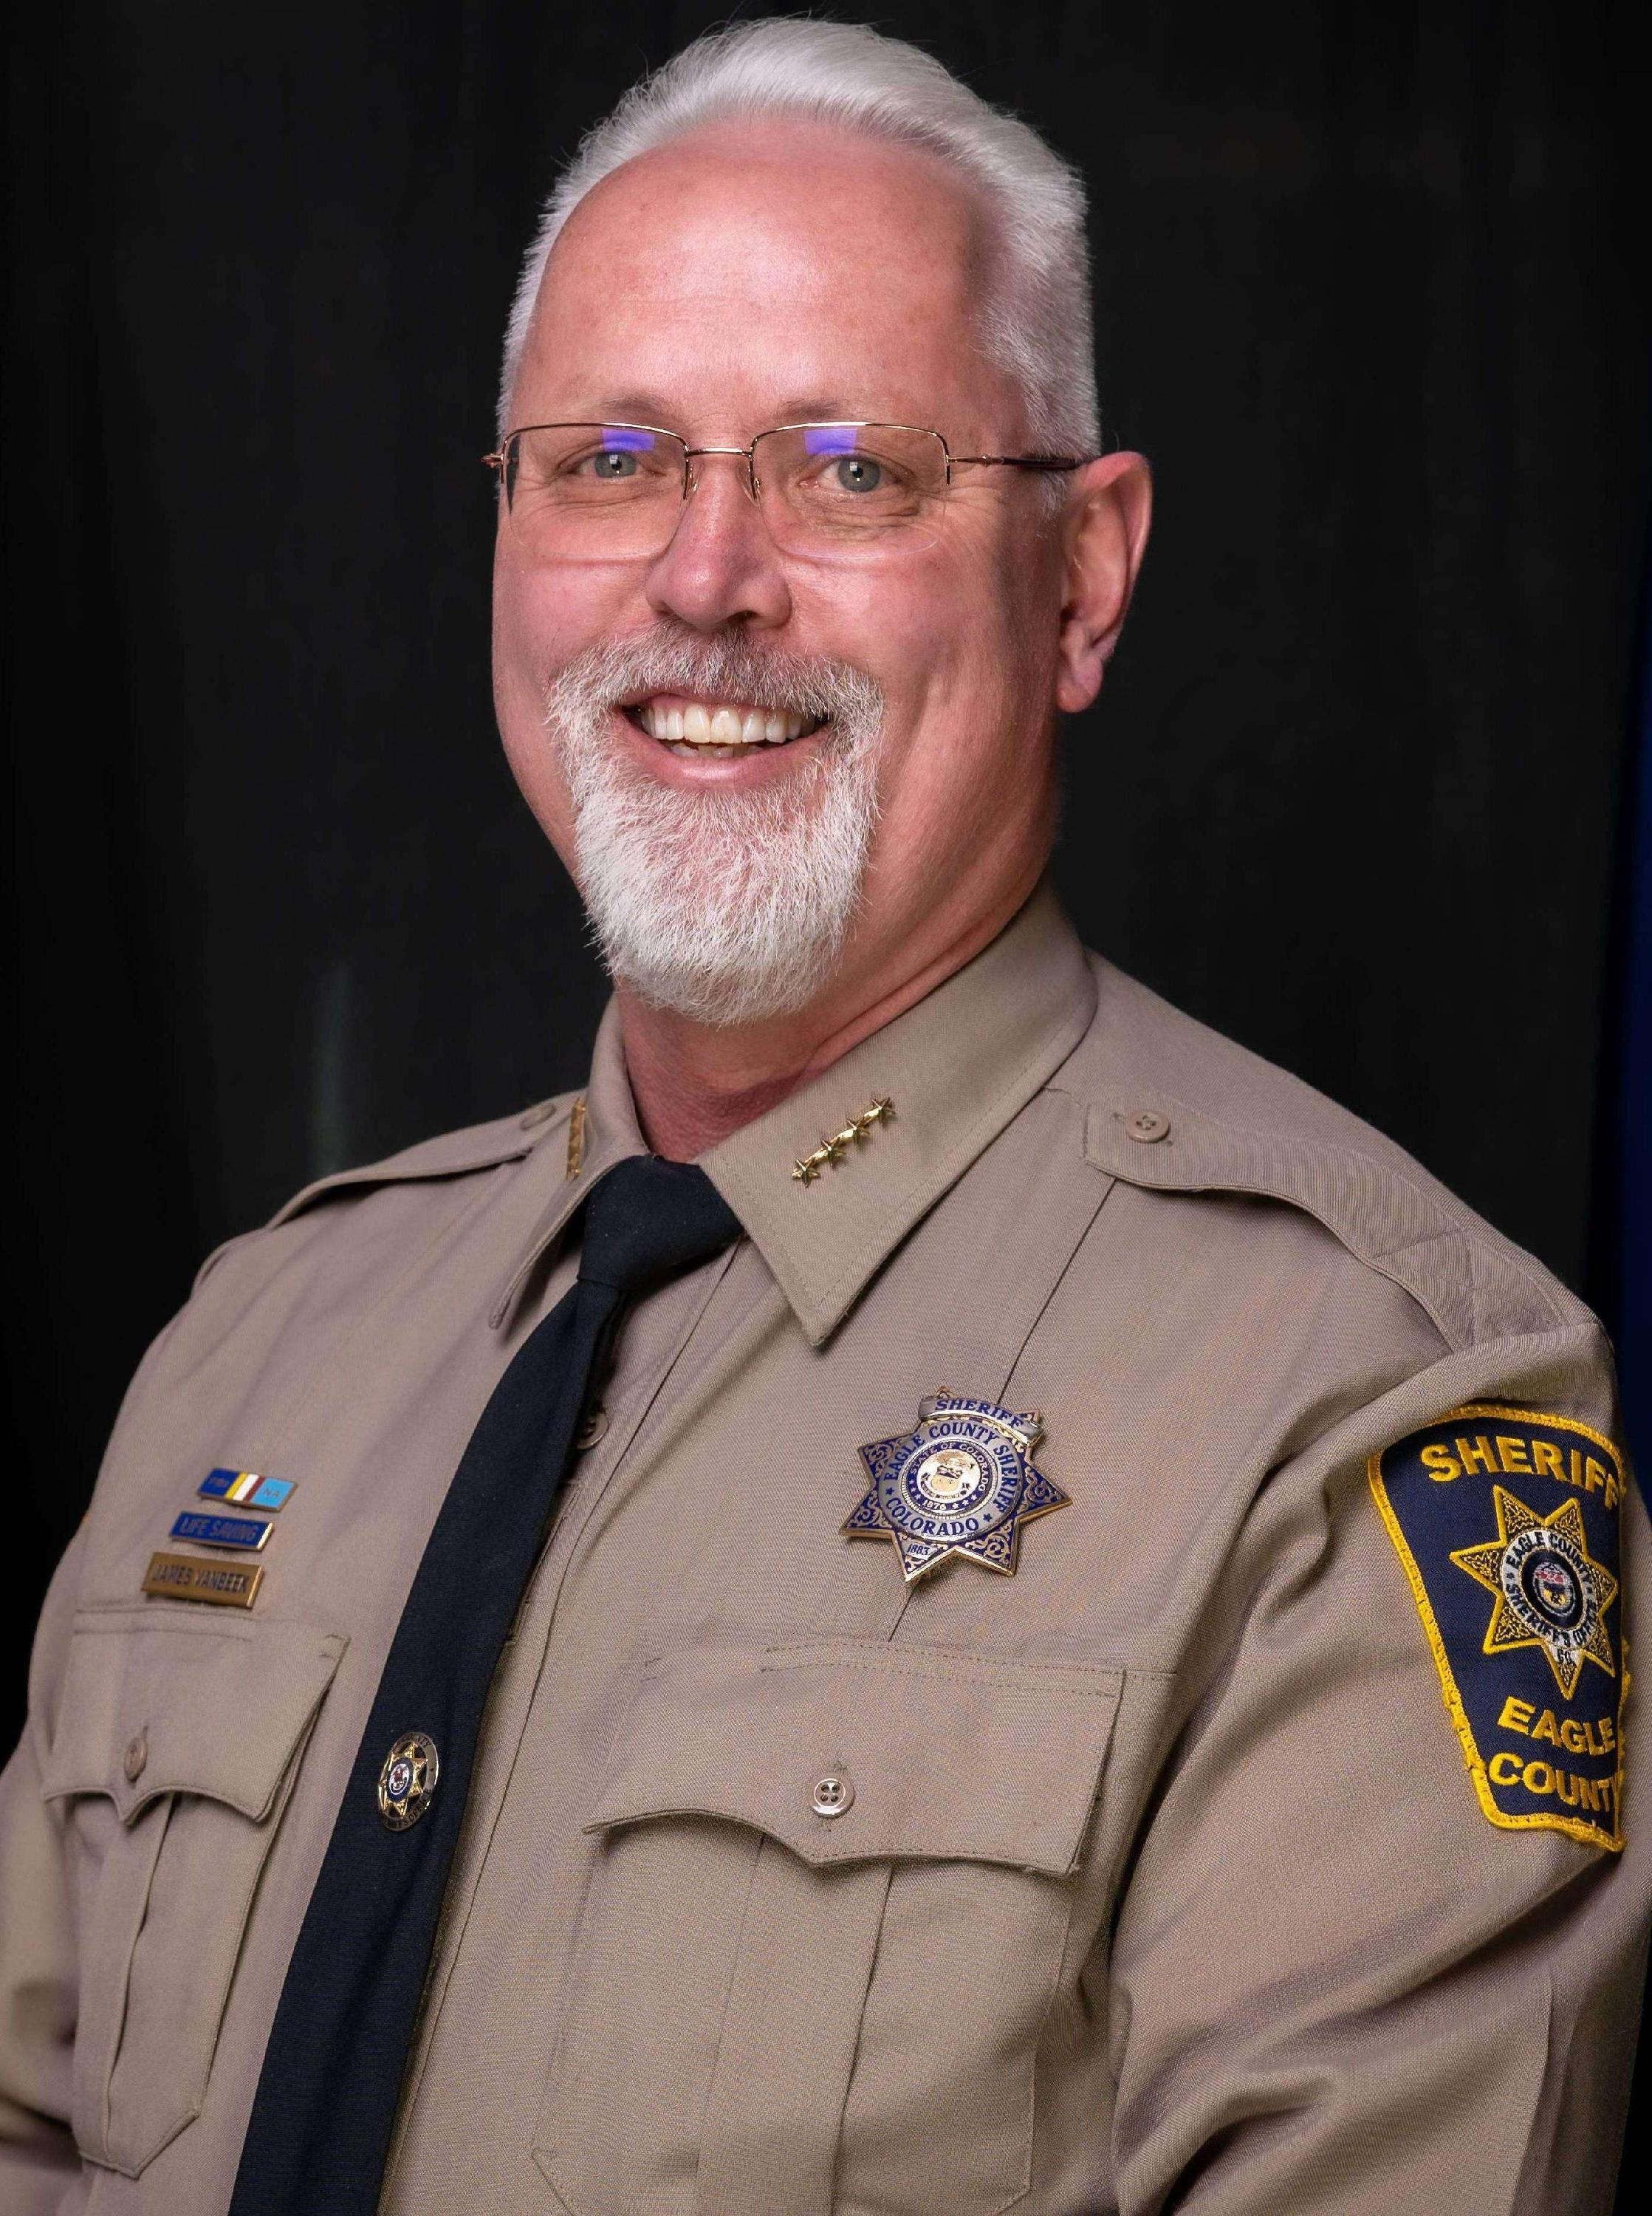 Sheriff New Photo